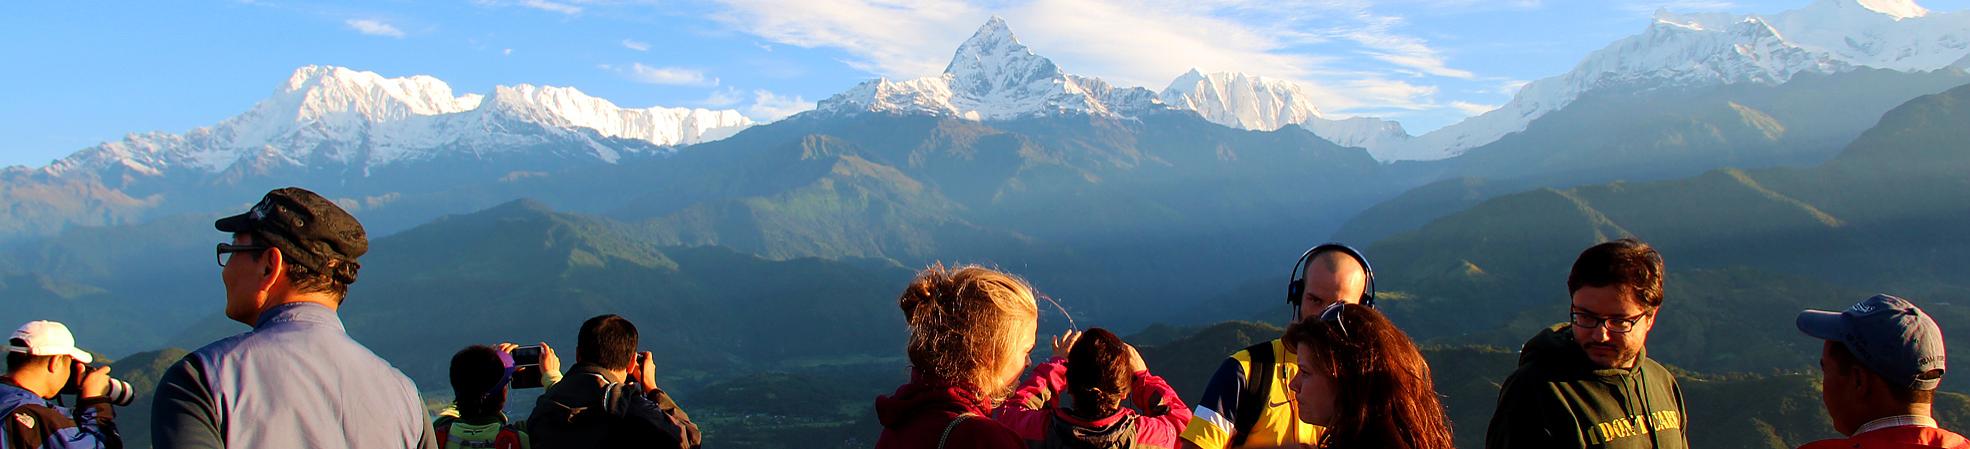 Best of Nepal: Kathmandu, the Himalayas and More